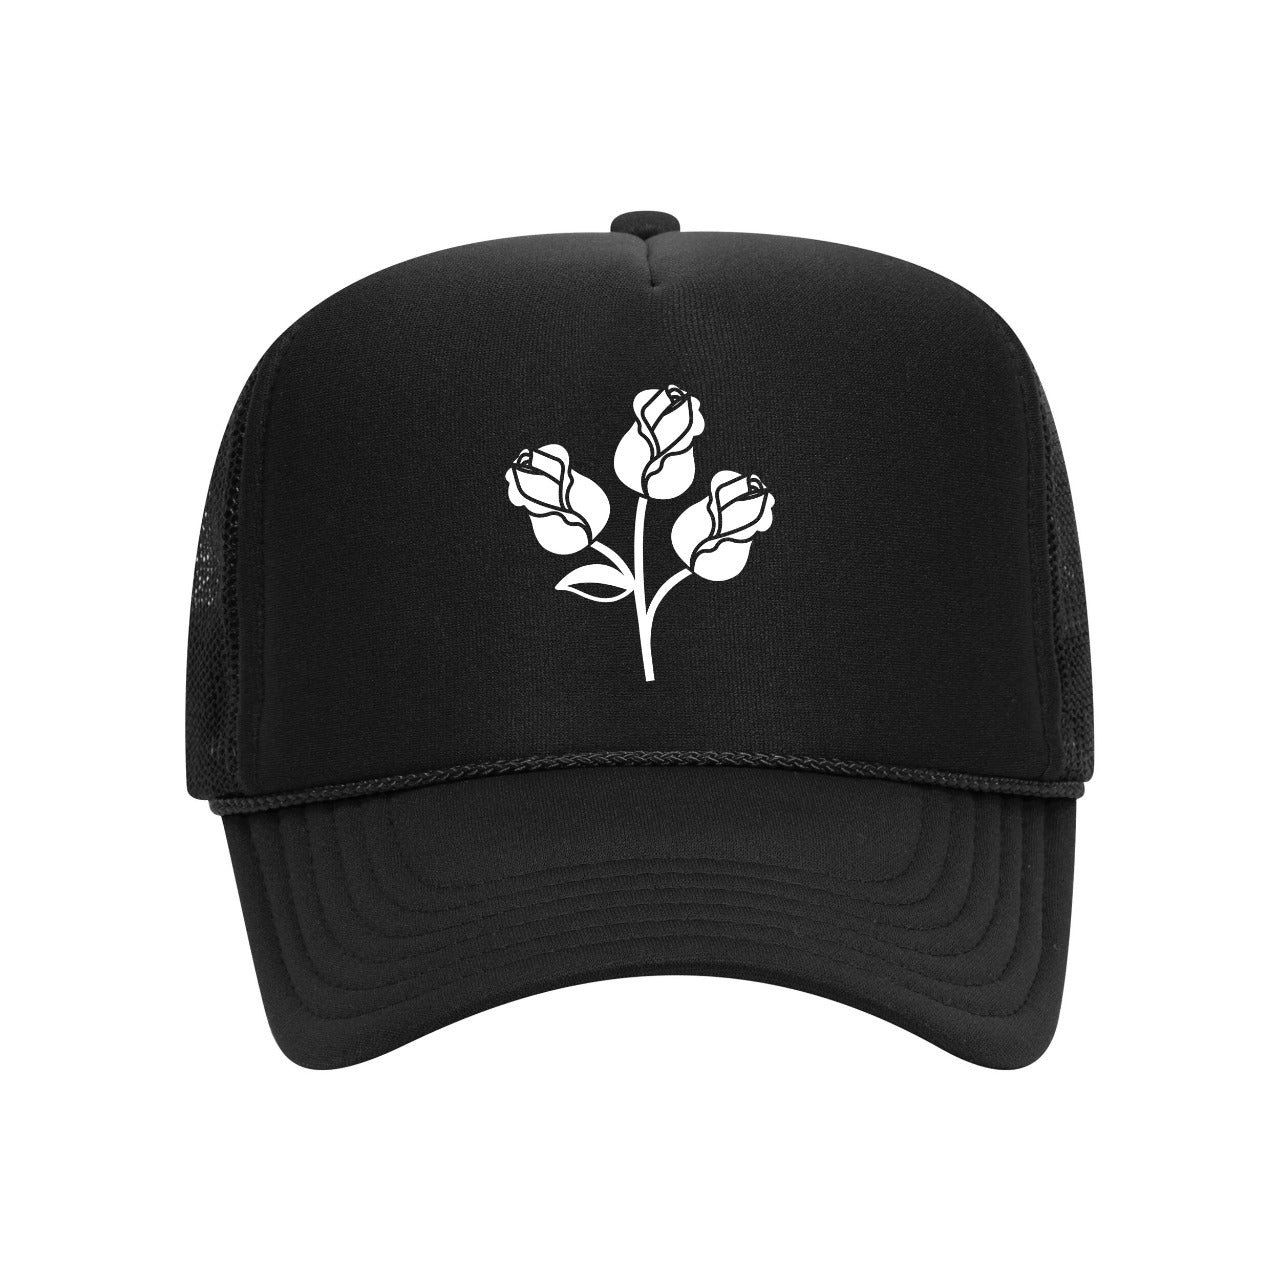 “Blanco Tr3s” Trucker Hat